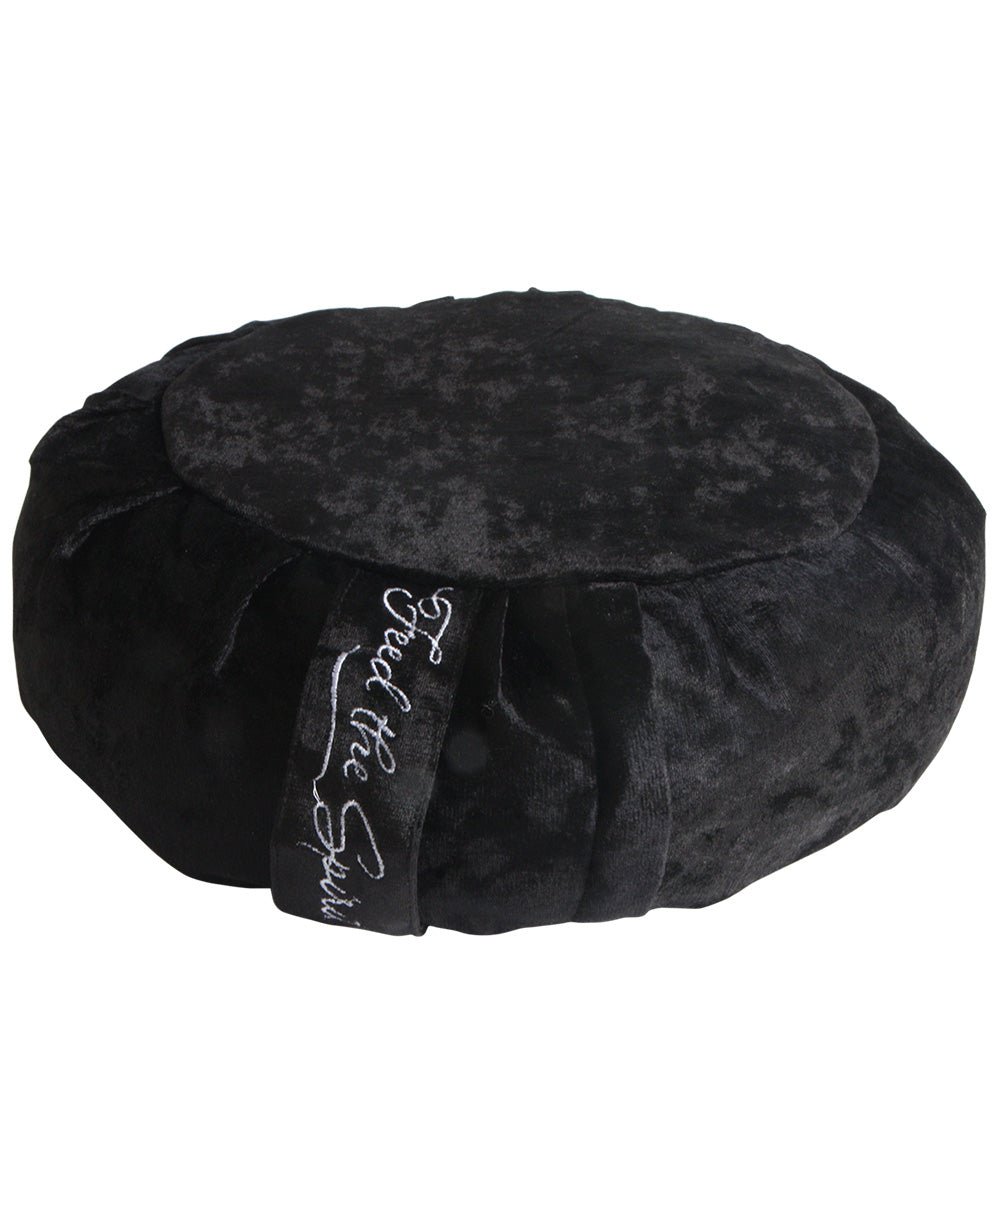 Feed the Spirit Velvet Zafu Cushion - Massage Cushions Black